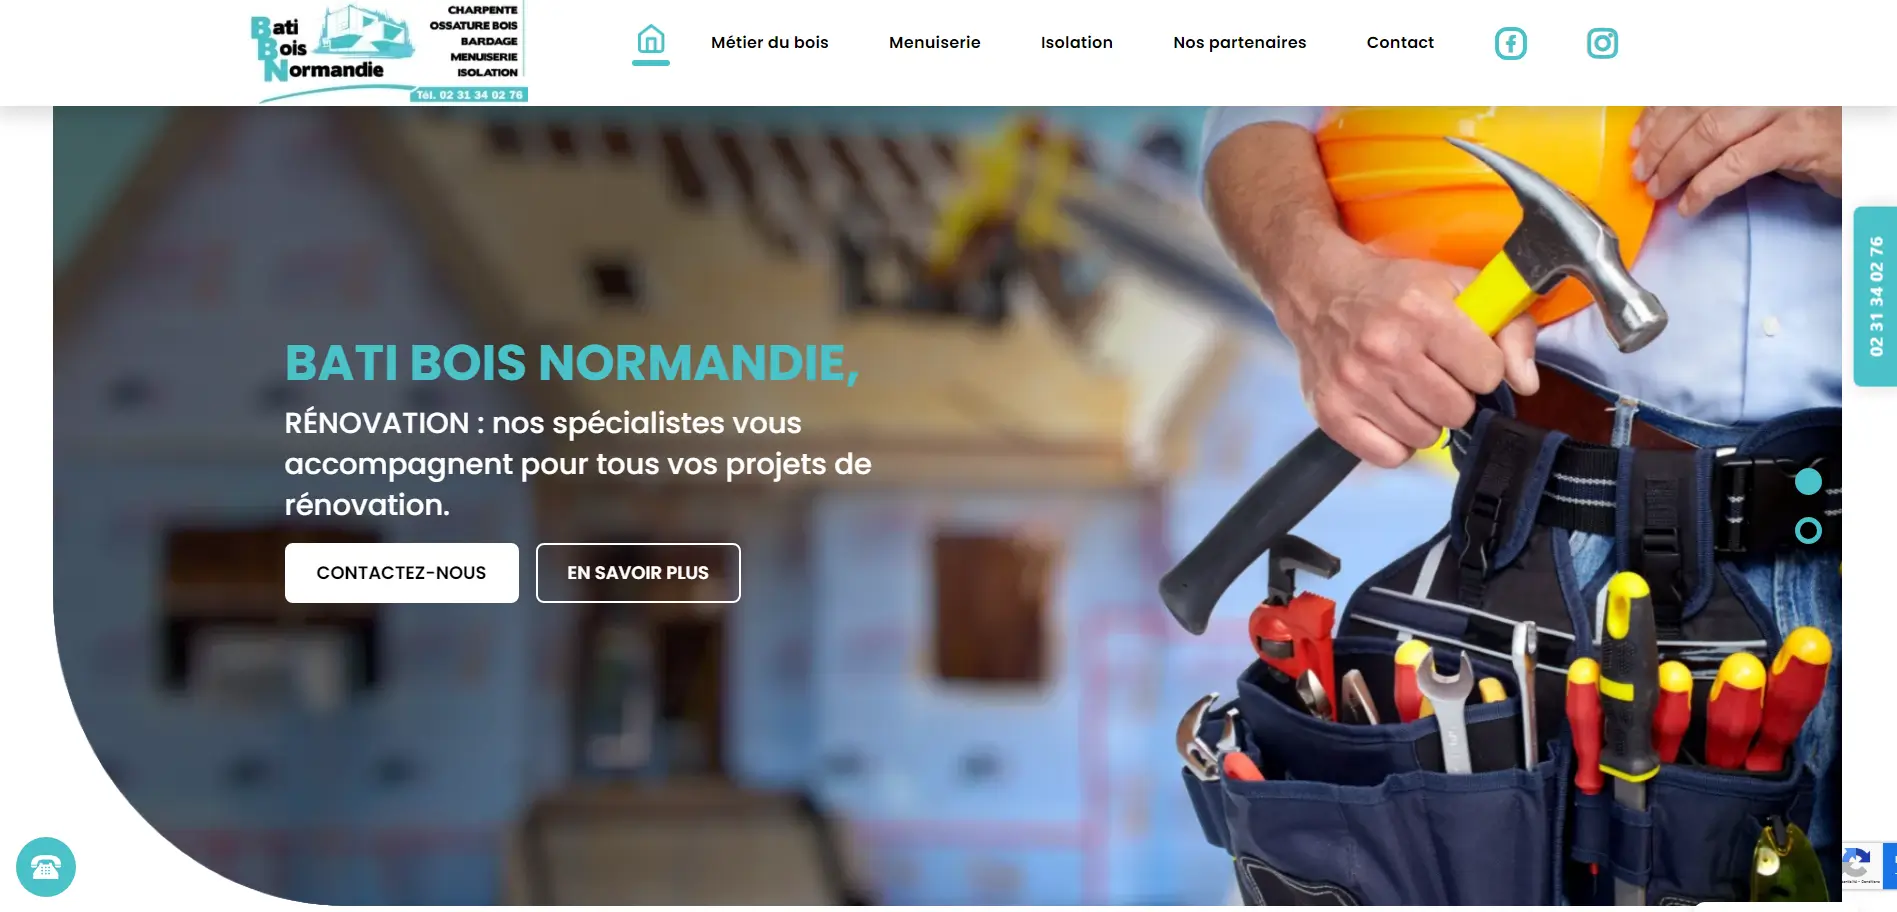 Coherence Agence Digitale Bati Bois Normandie